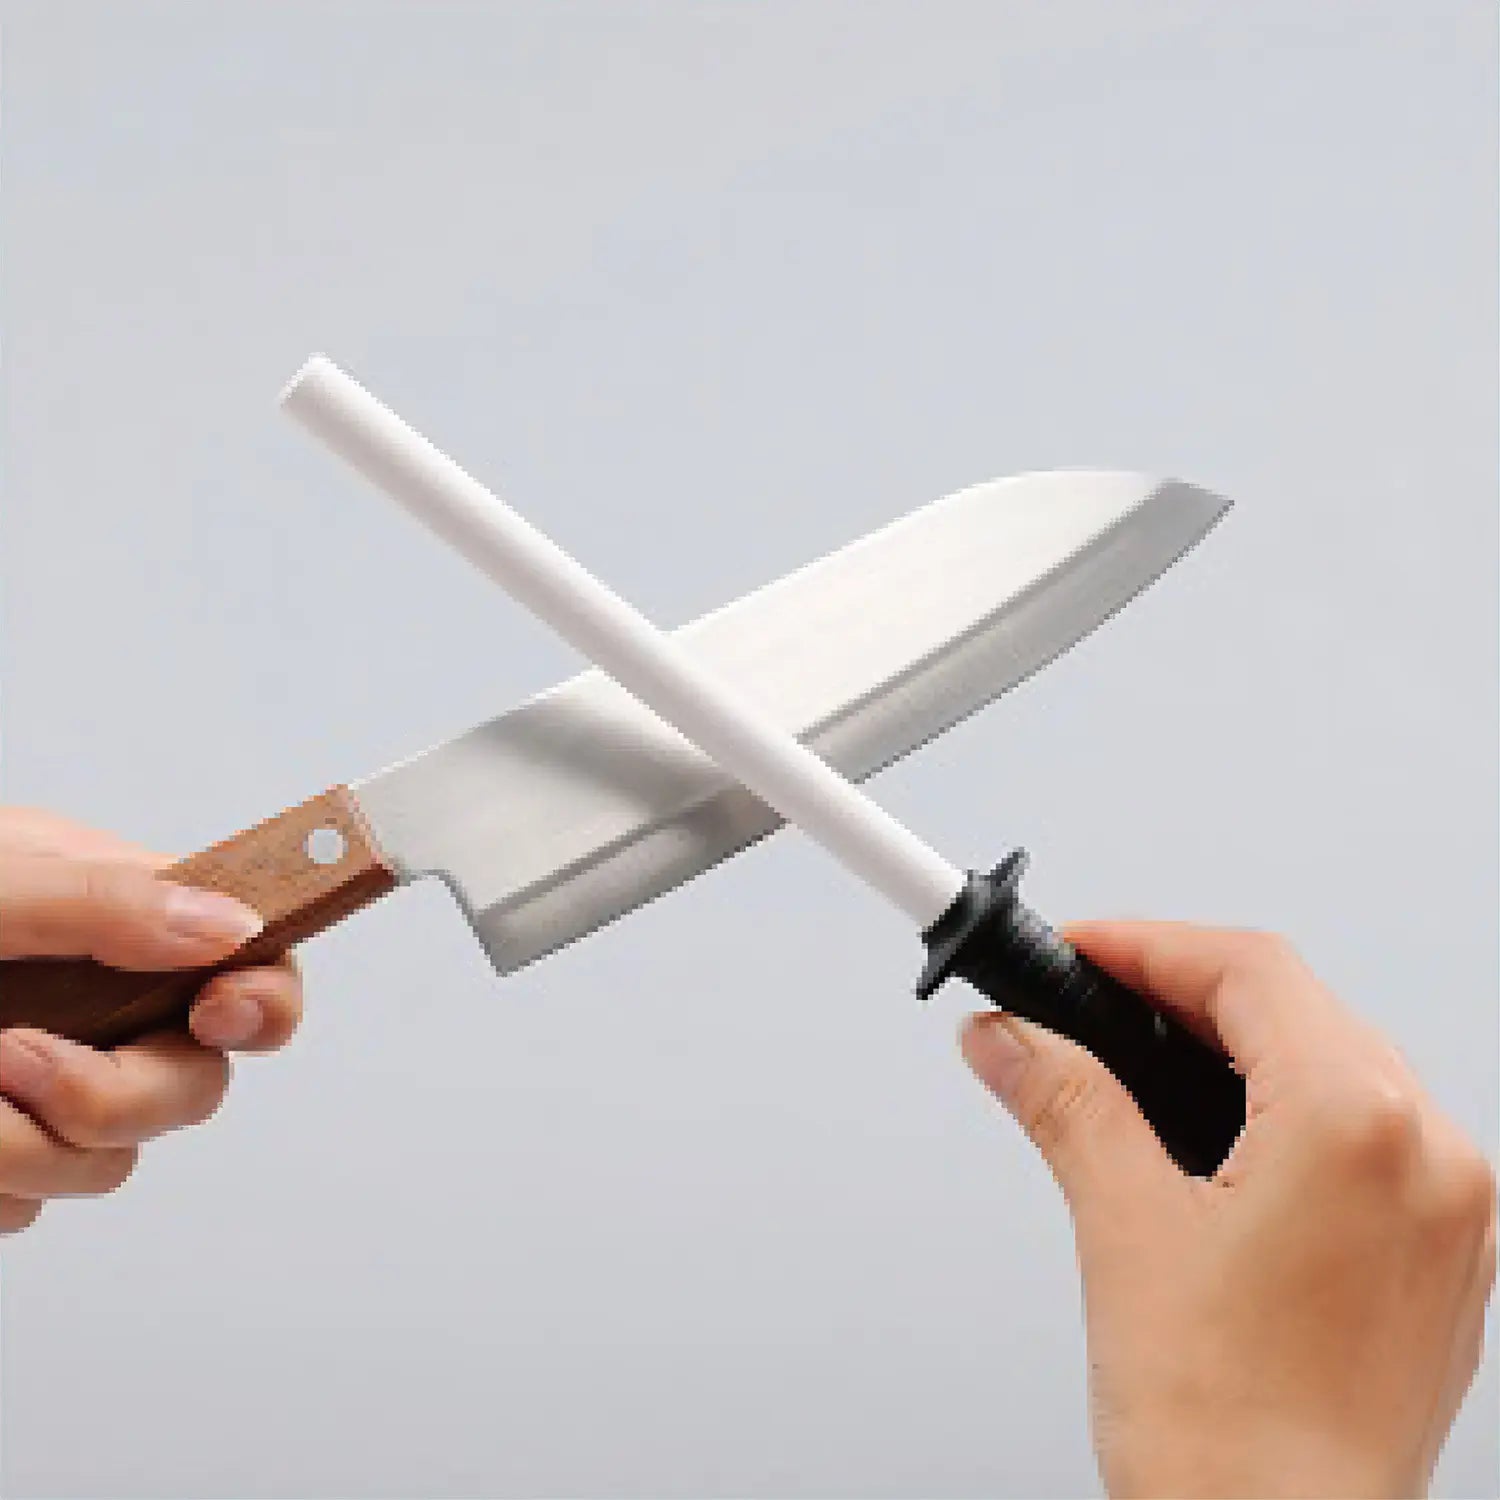 MAC Ceramic Sharpening Honing Rod (215mm and 180mm)